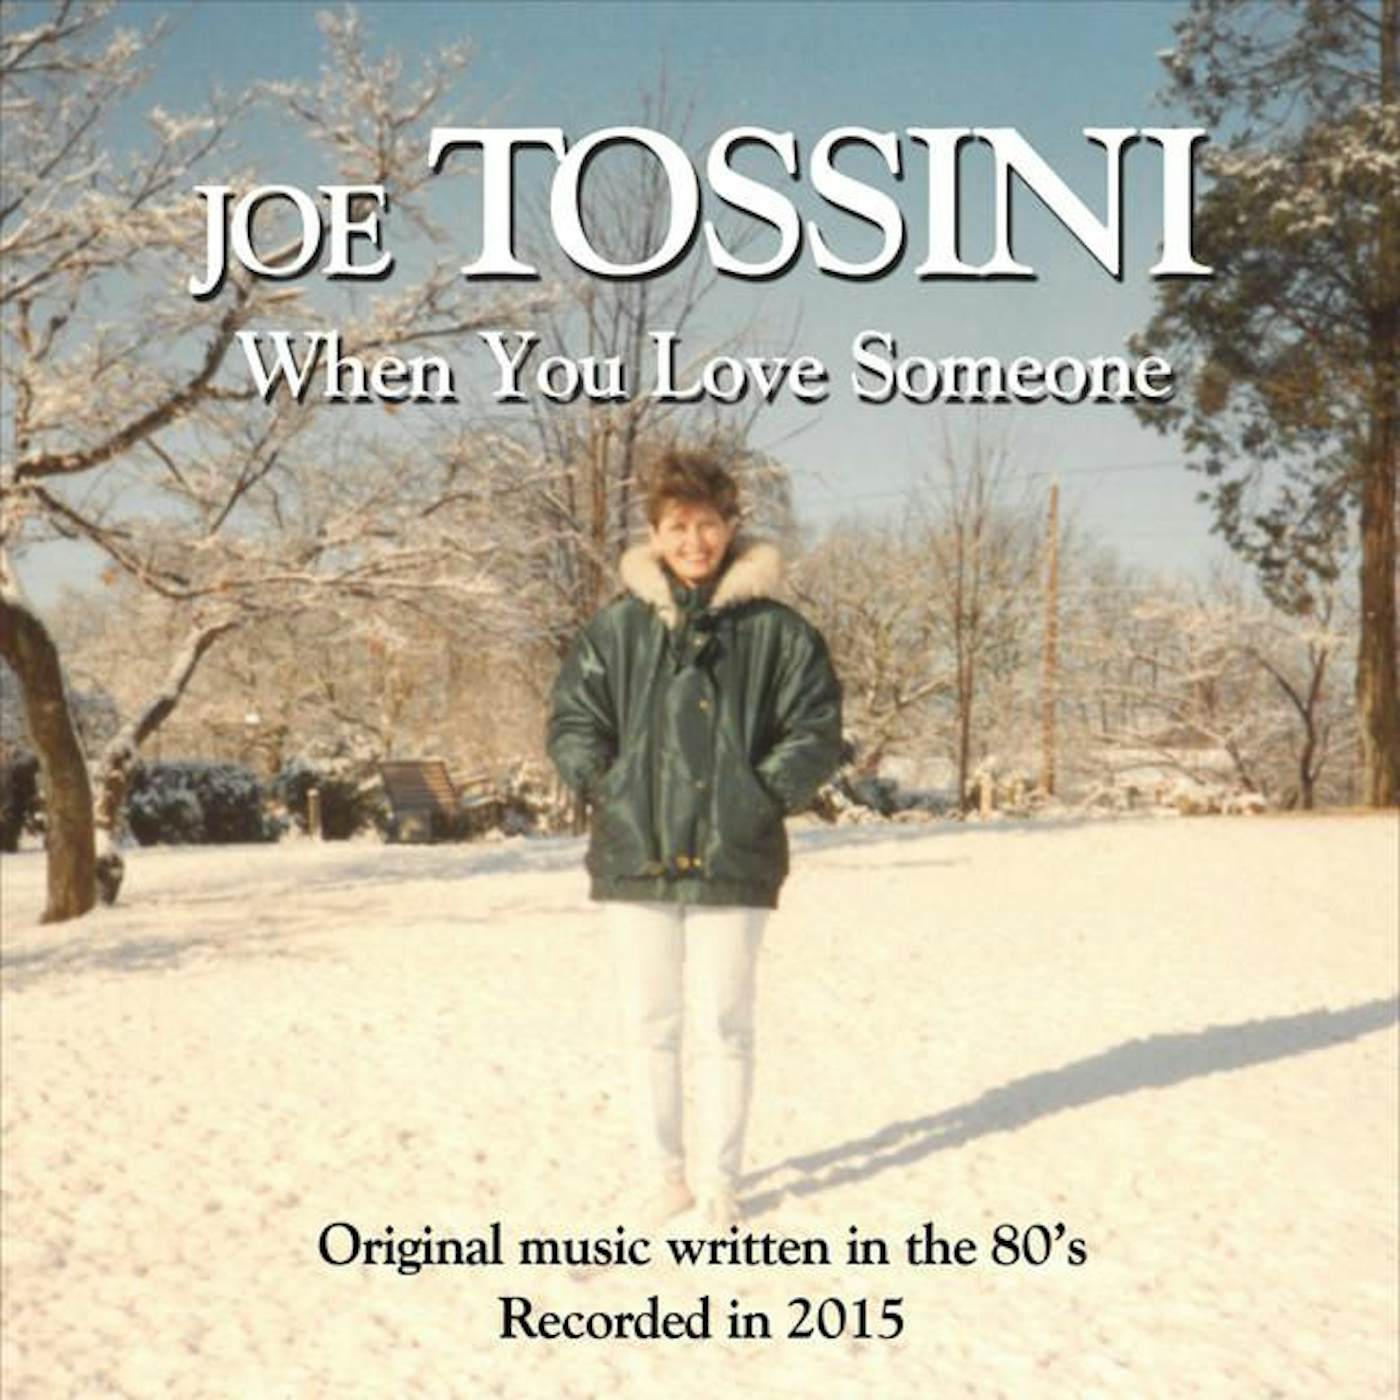 Joe Tossini